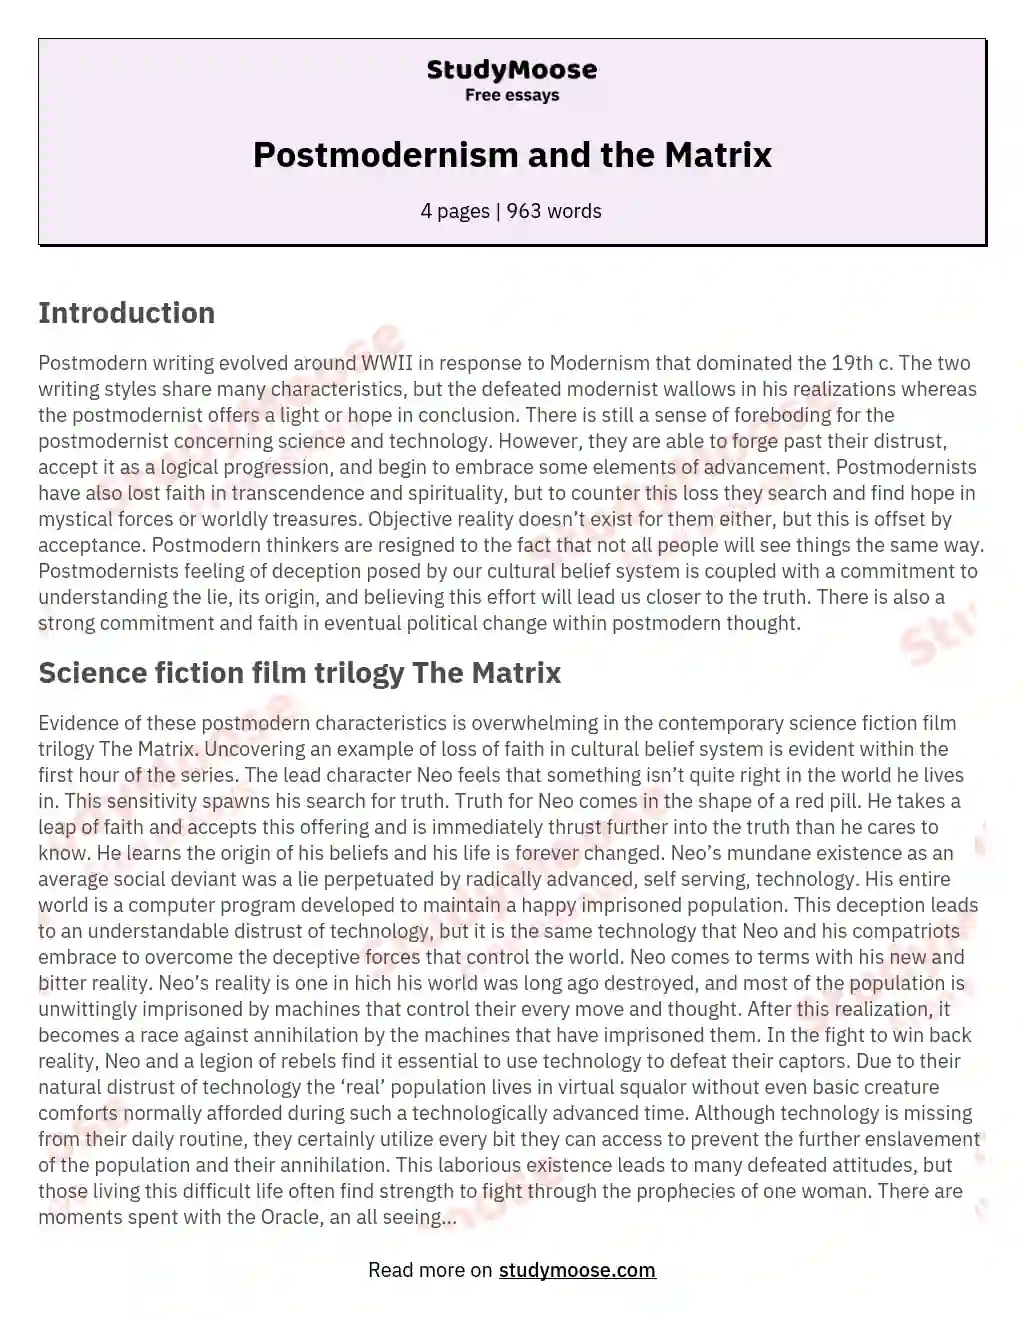 Postmodernism and the Matrix essay